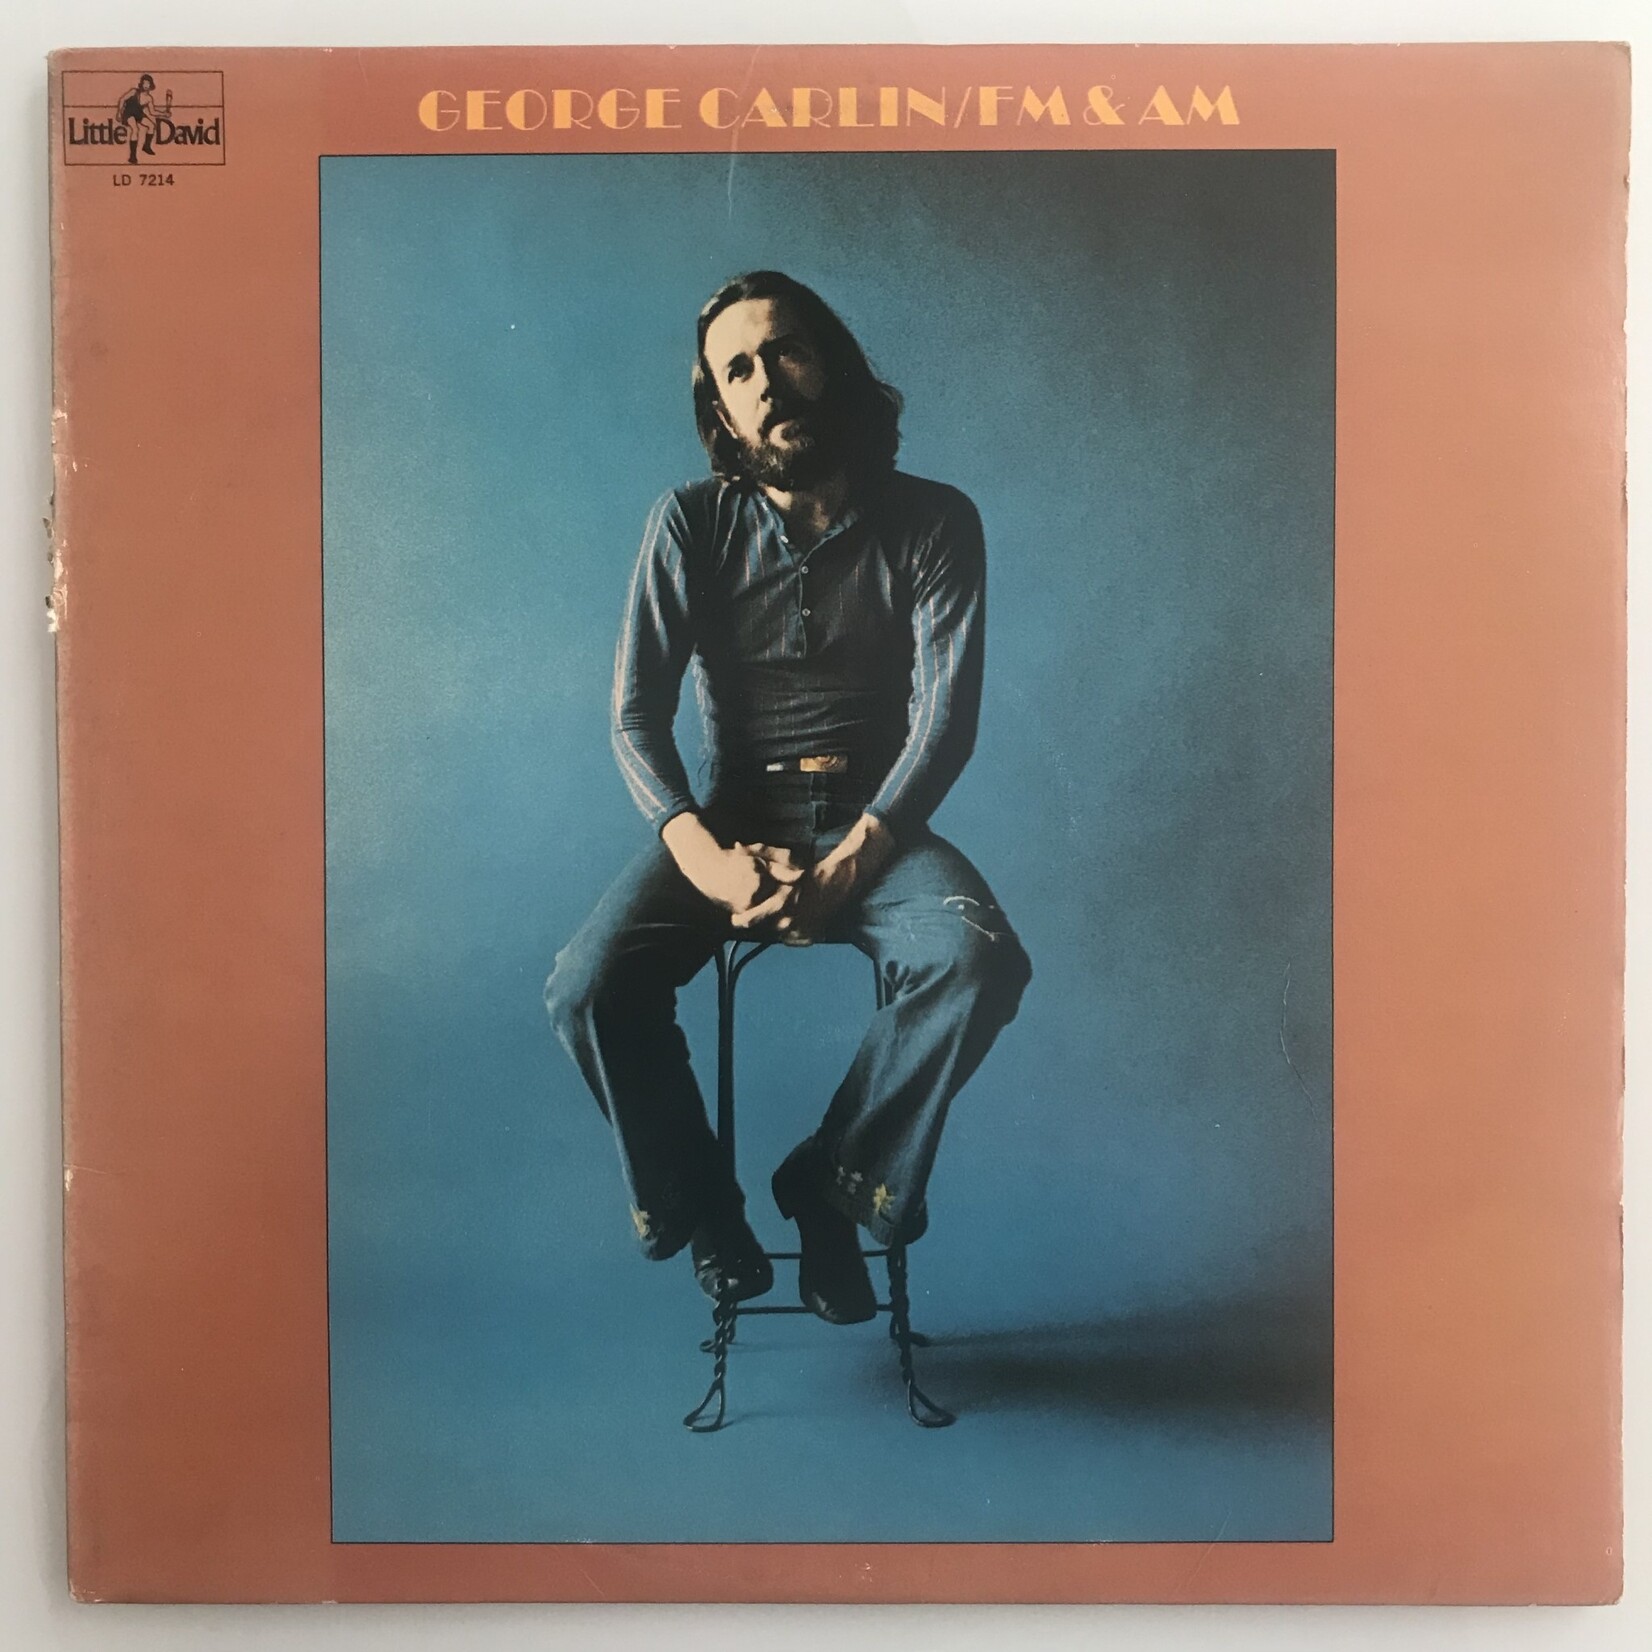 George Carlin - FM & AM - LD 7214 - Vinyl LP (USED)